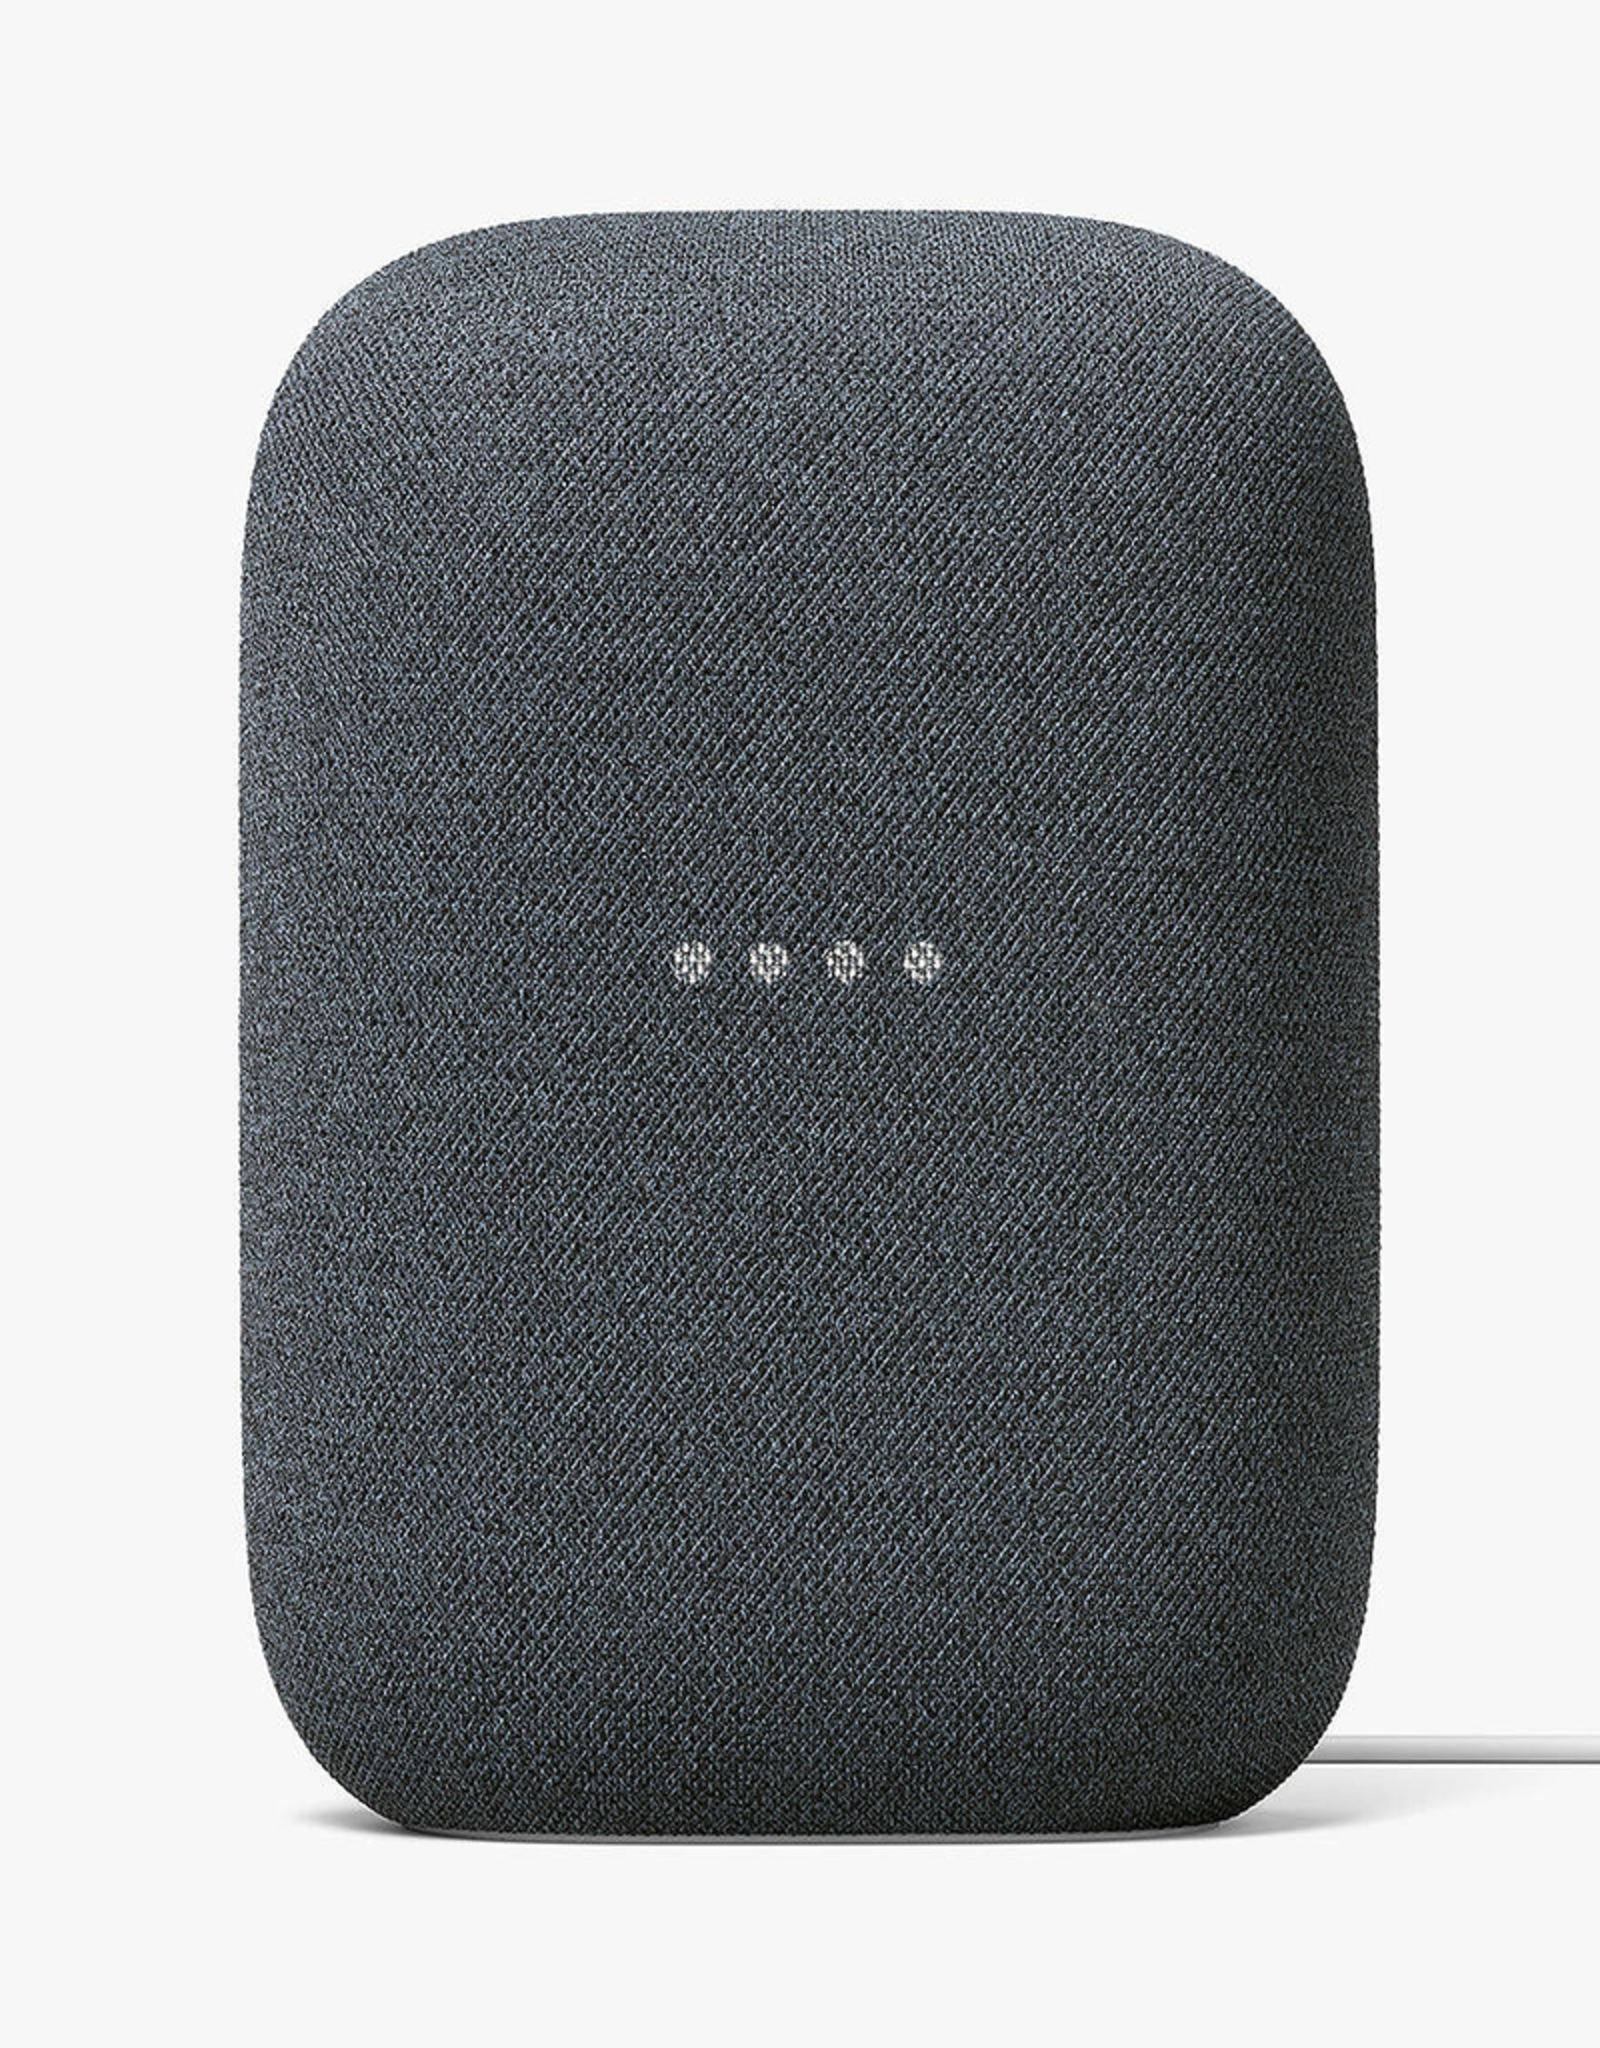 Google Google - Nest Audio - Smart Speaker - Charcoal